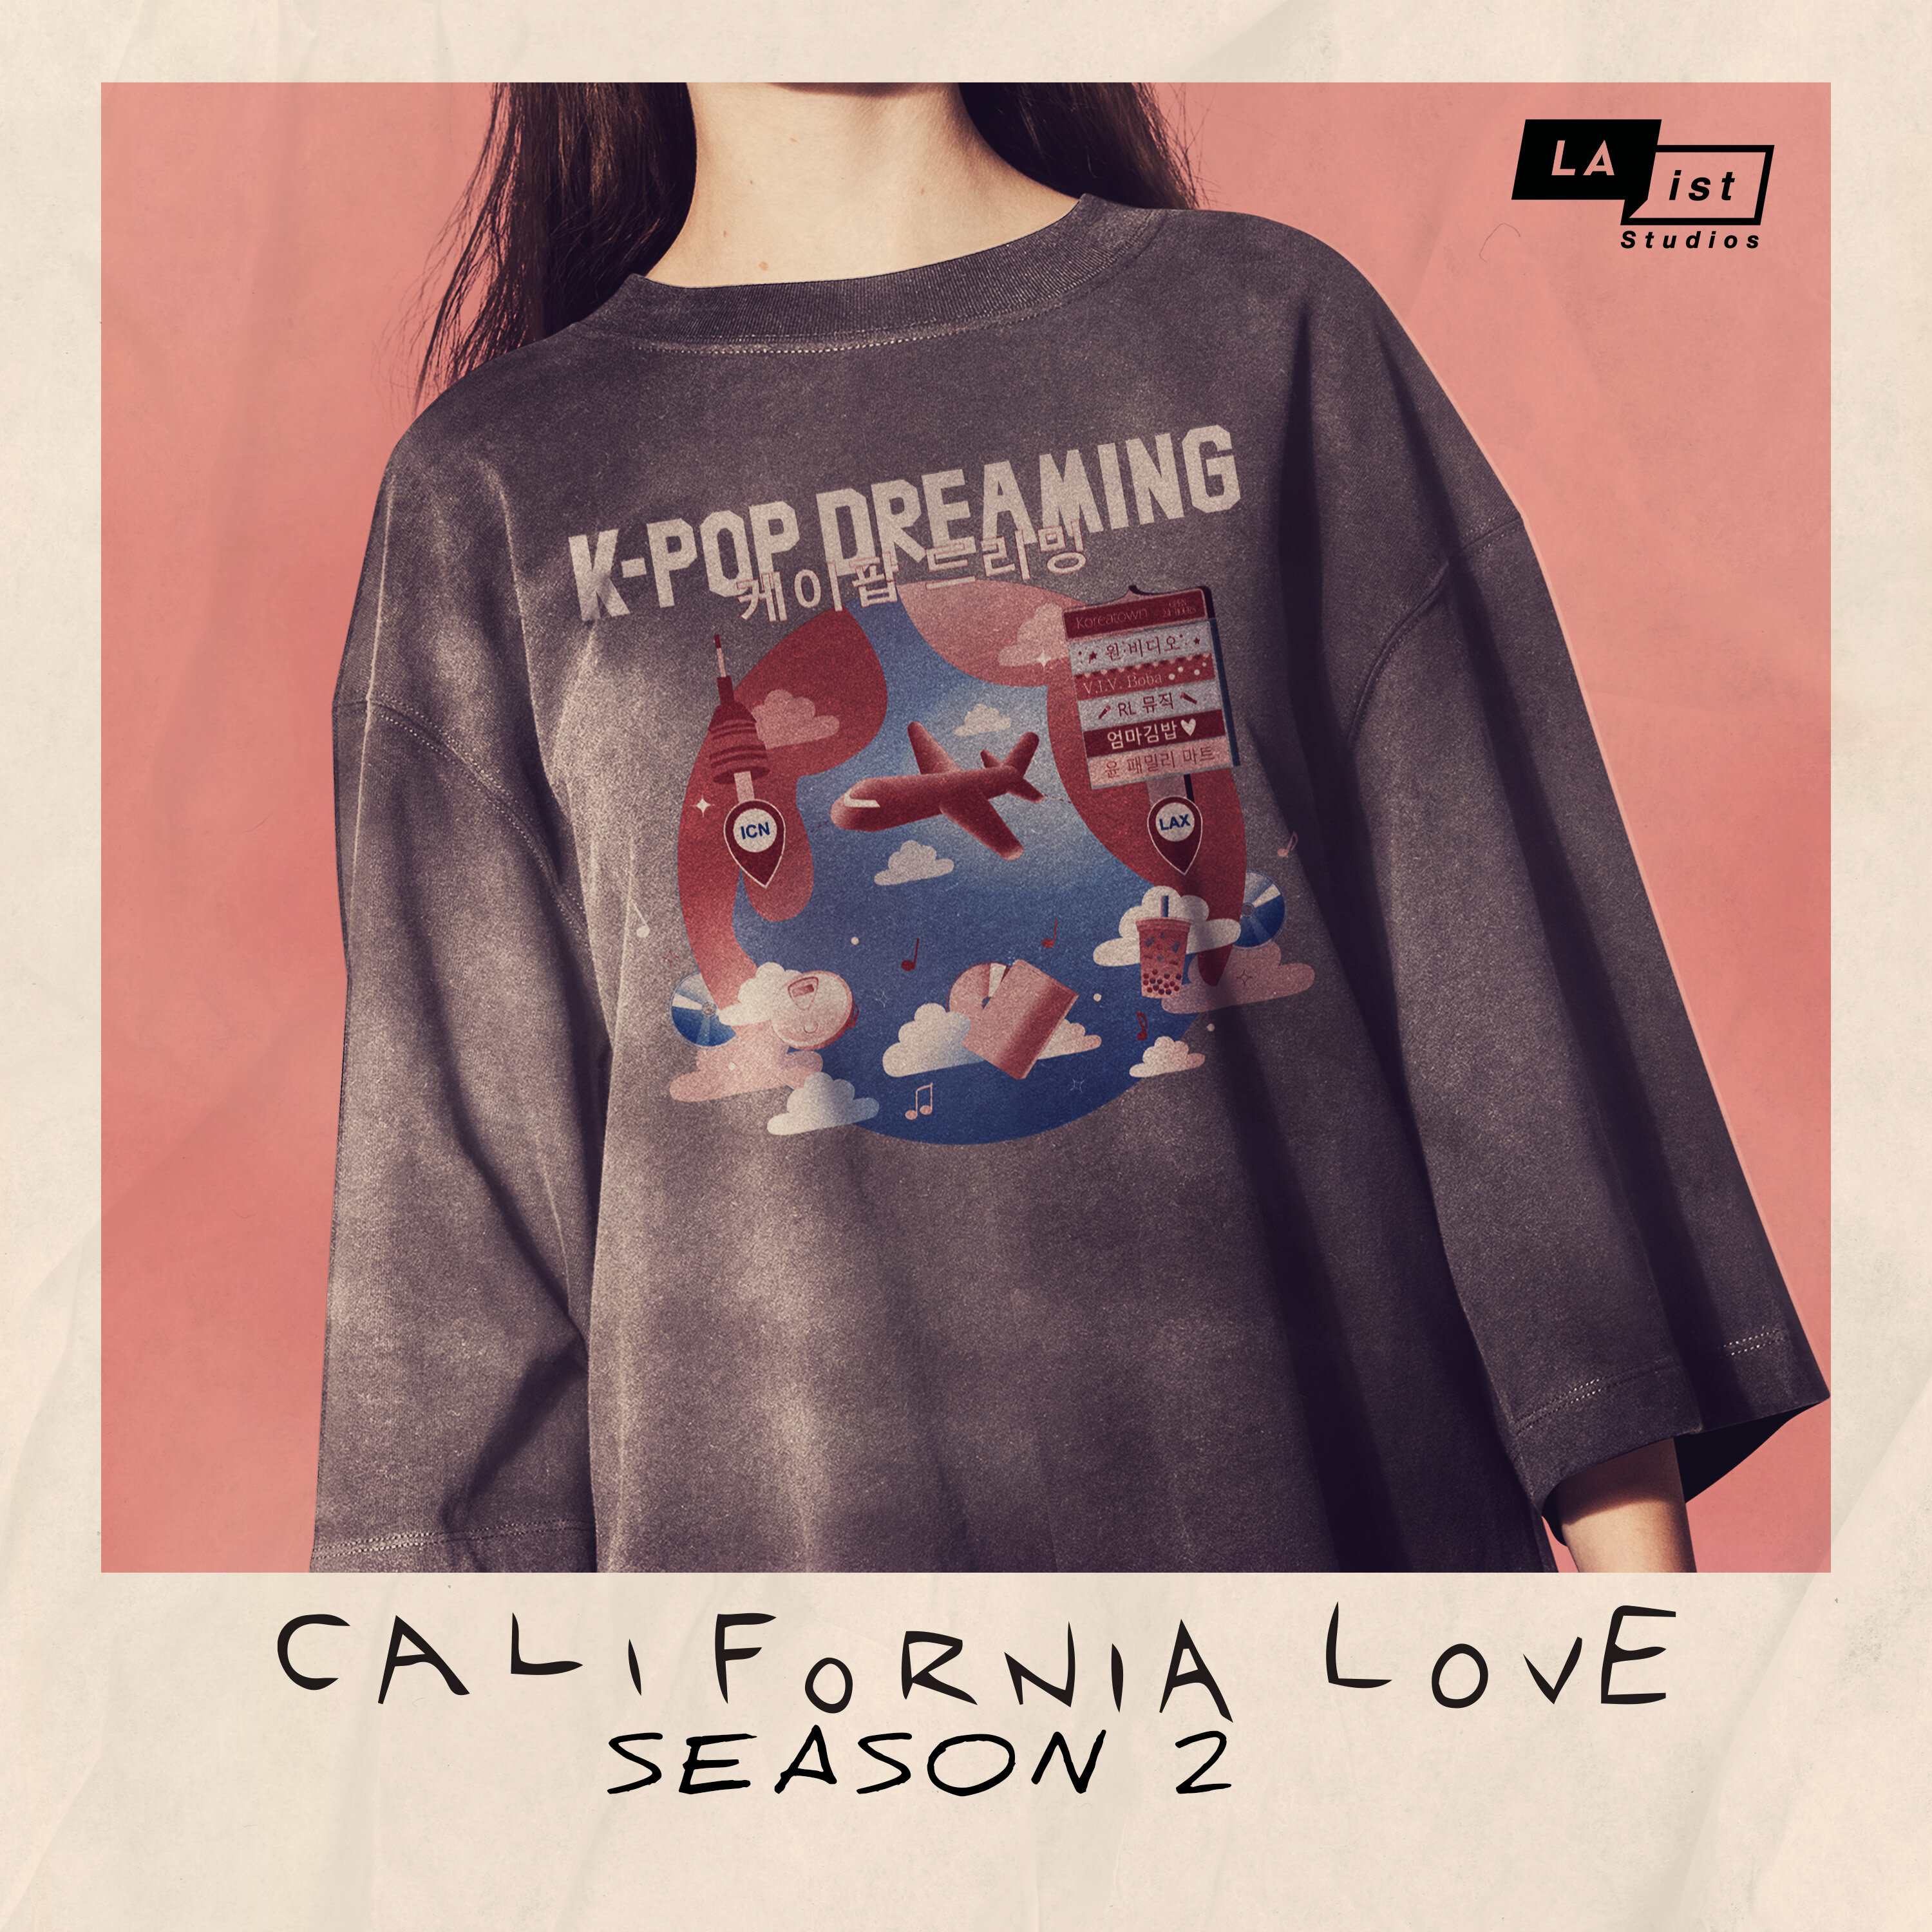 Introducing California Love: K-Pop Dreaming, from LAist Studios